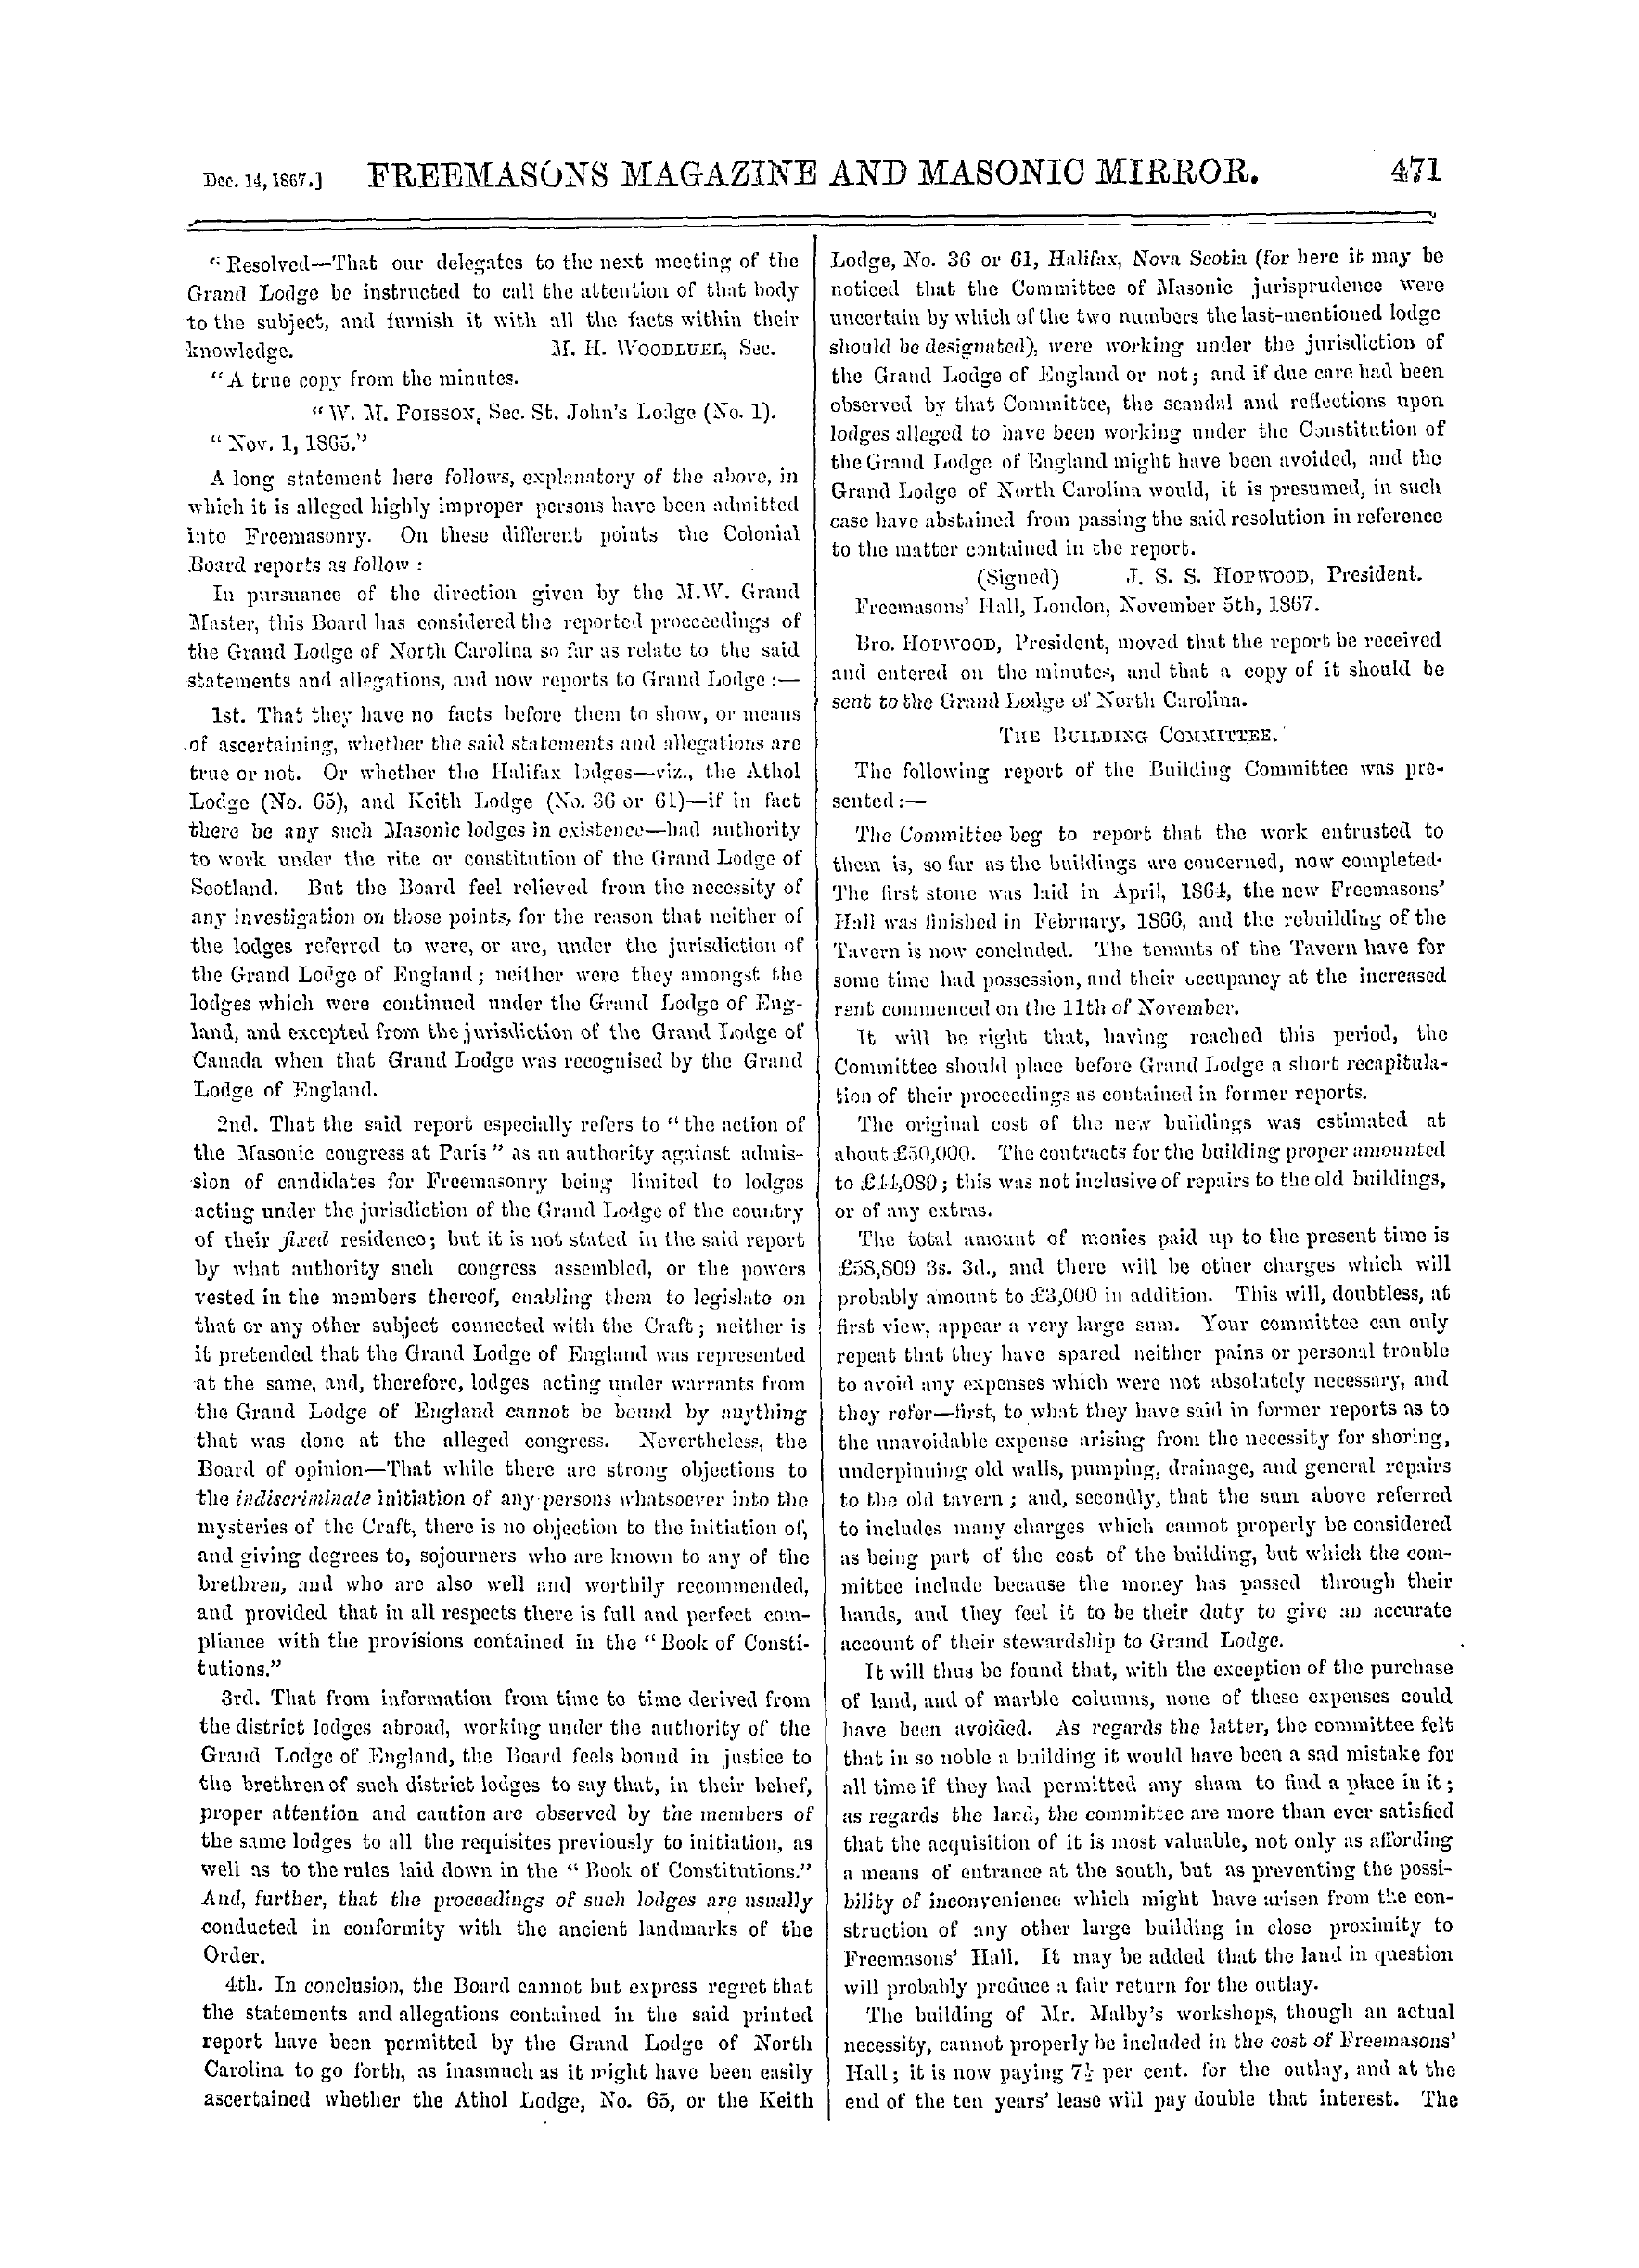 The Freemasons' Monthly Magazine: 1867-12-14 - Grand Lodge.